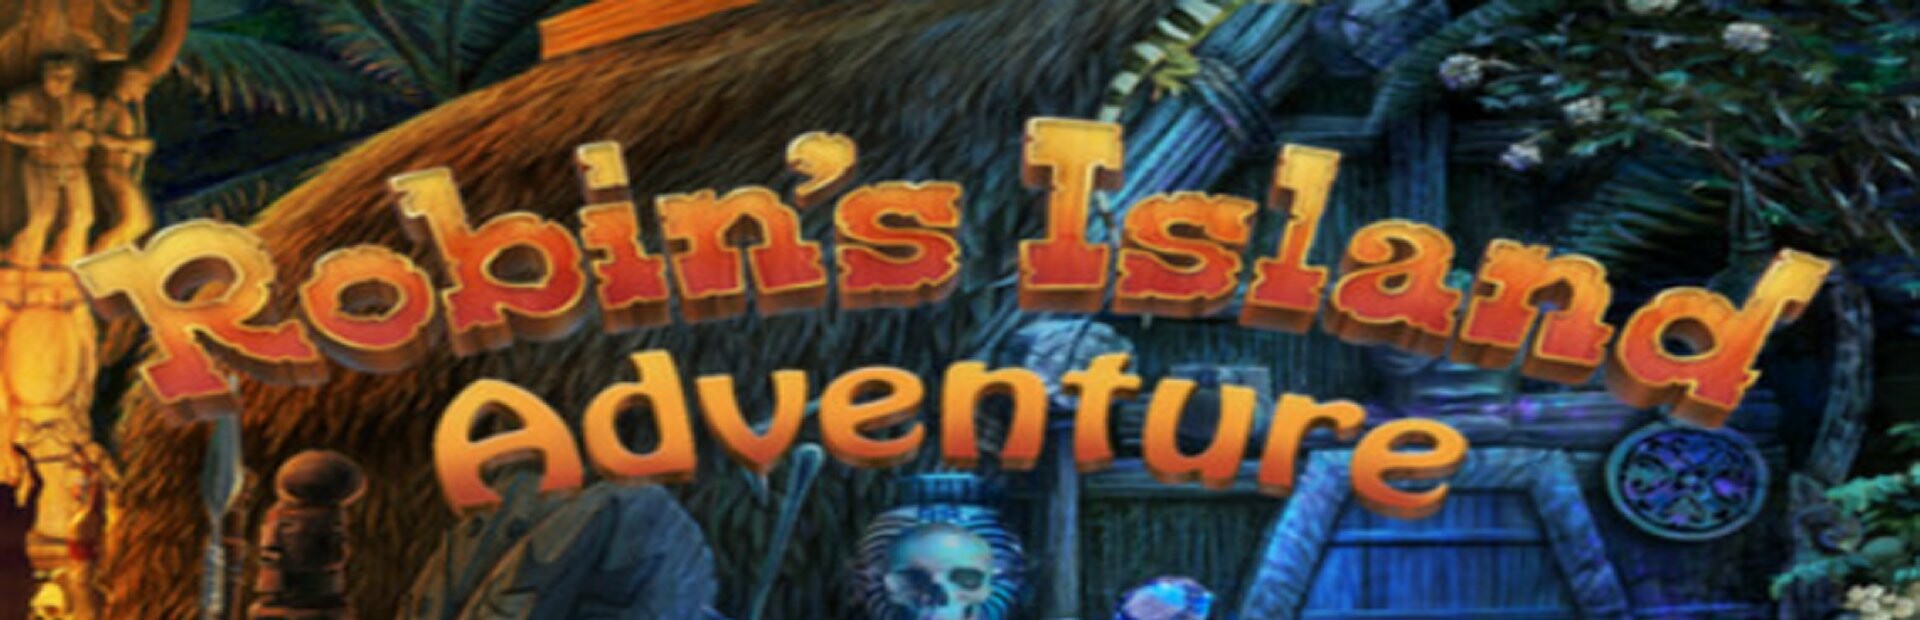 Robin's Island Adventure cover image